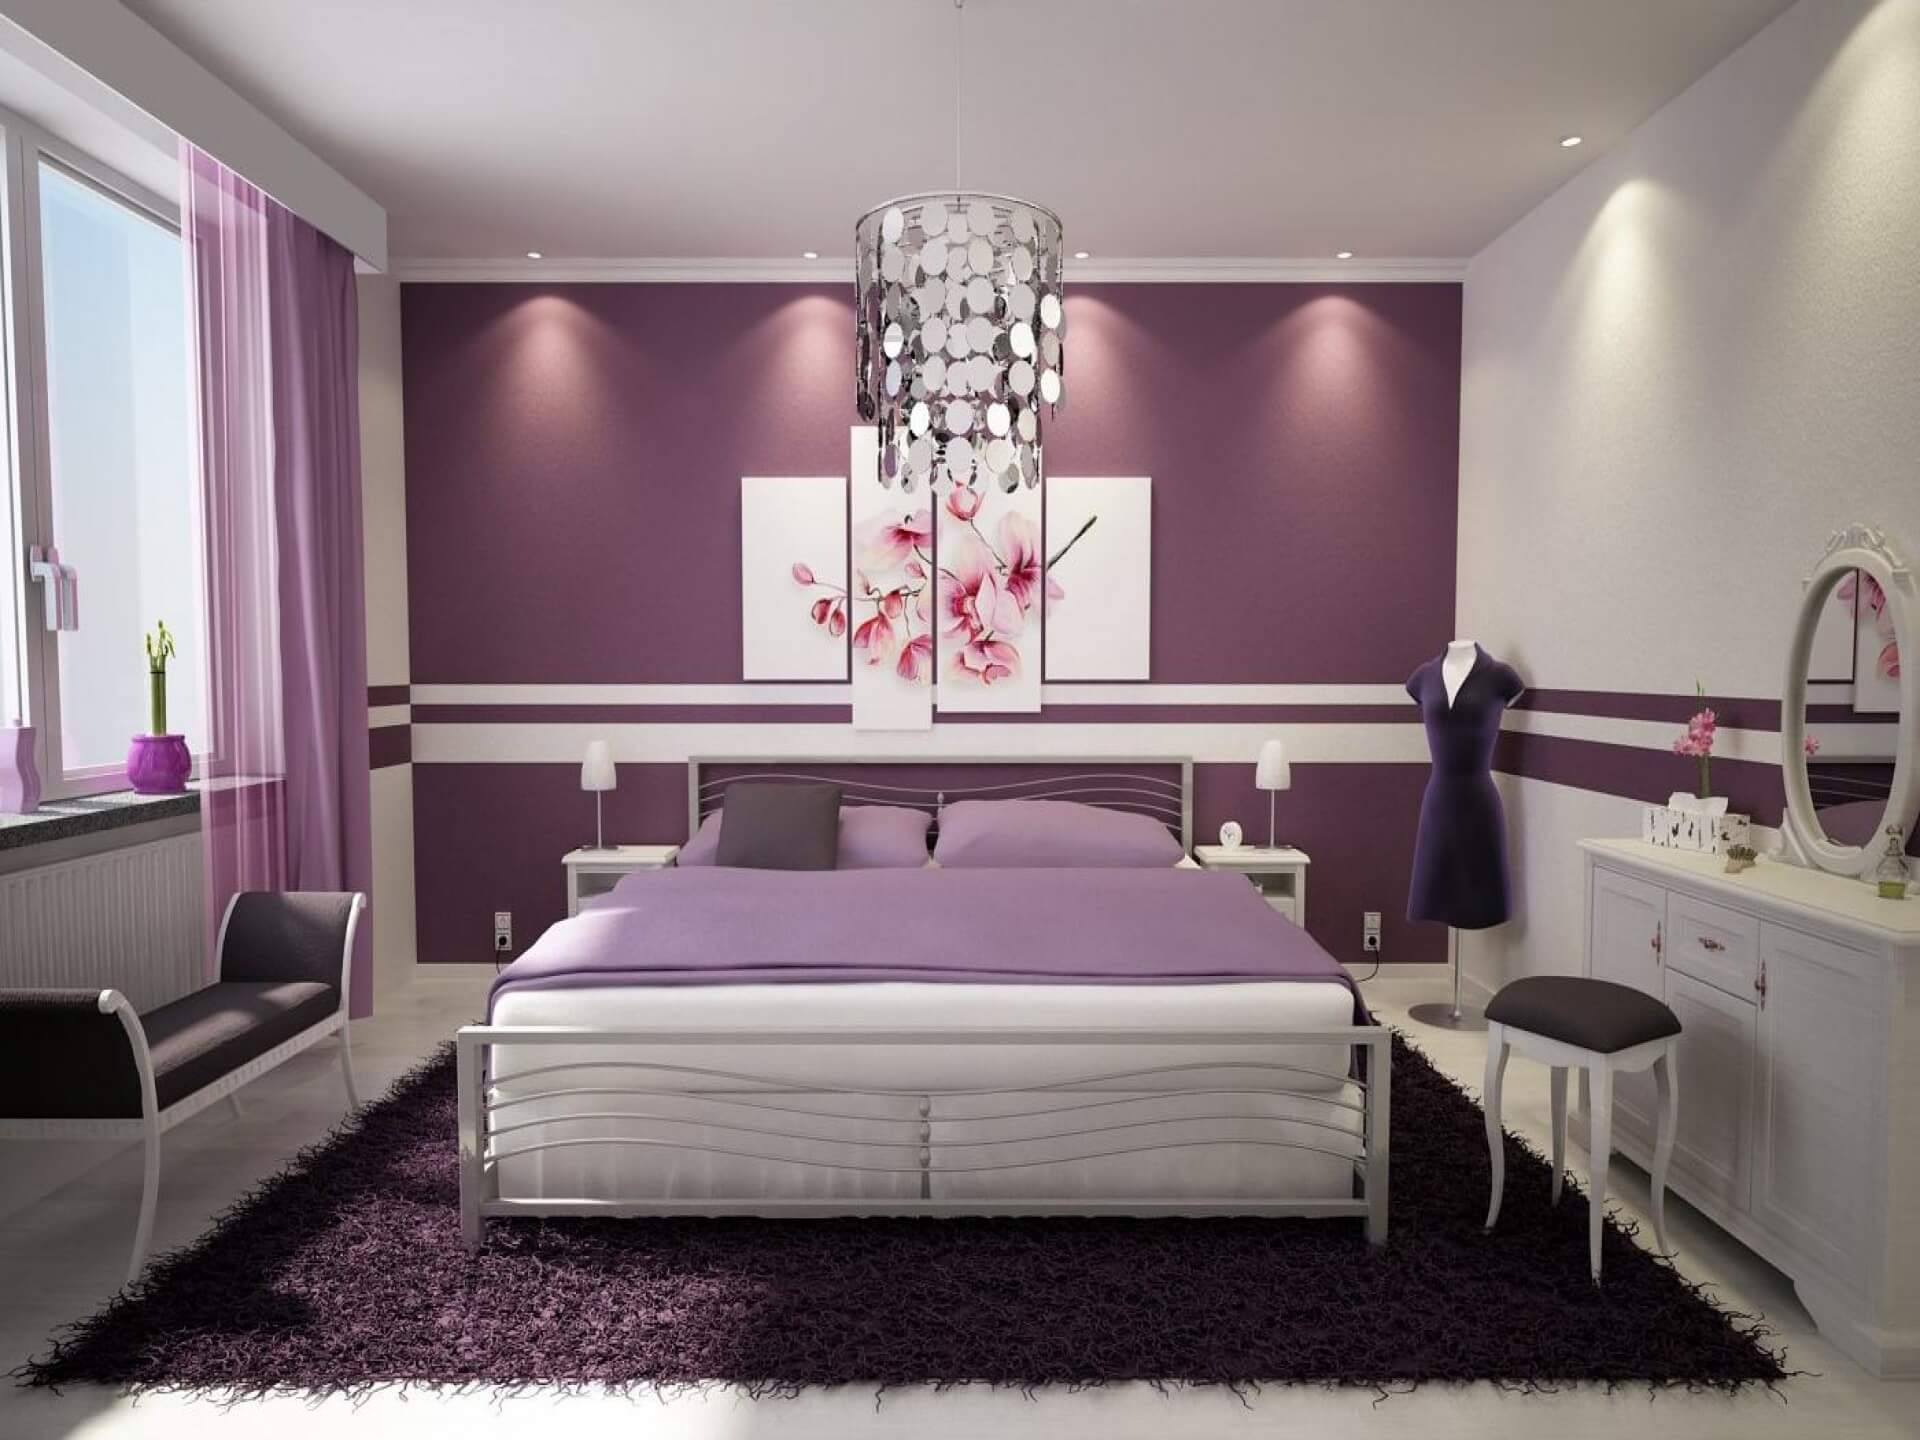 Girl Bedroom Painting Ideas
 Top 10 Girls Bedroom Paint Ideas 2017 TheyDesign